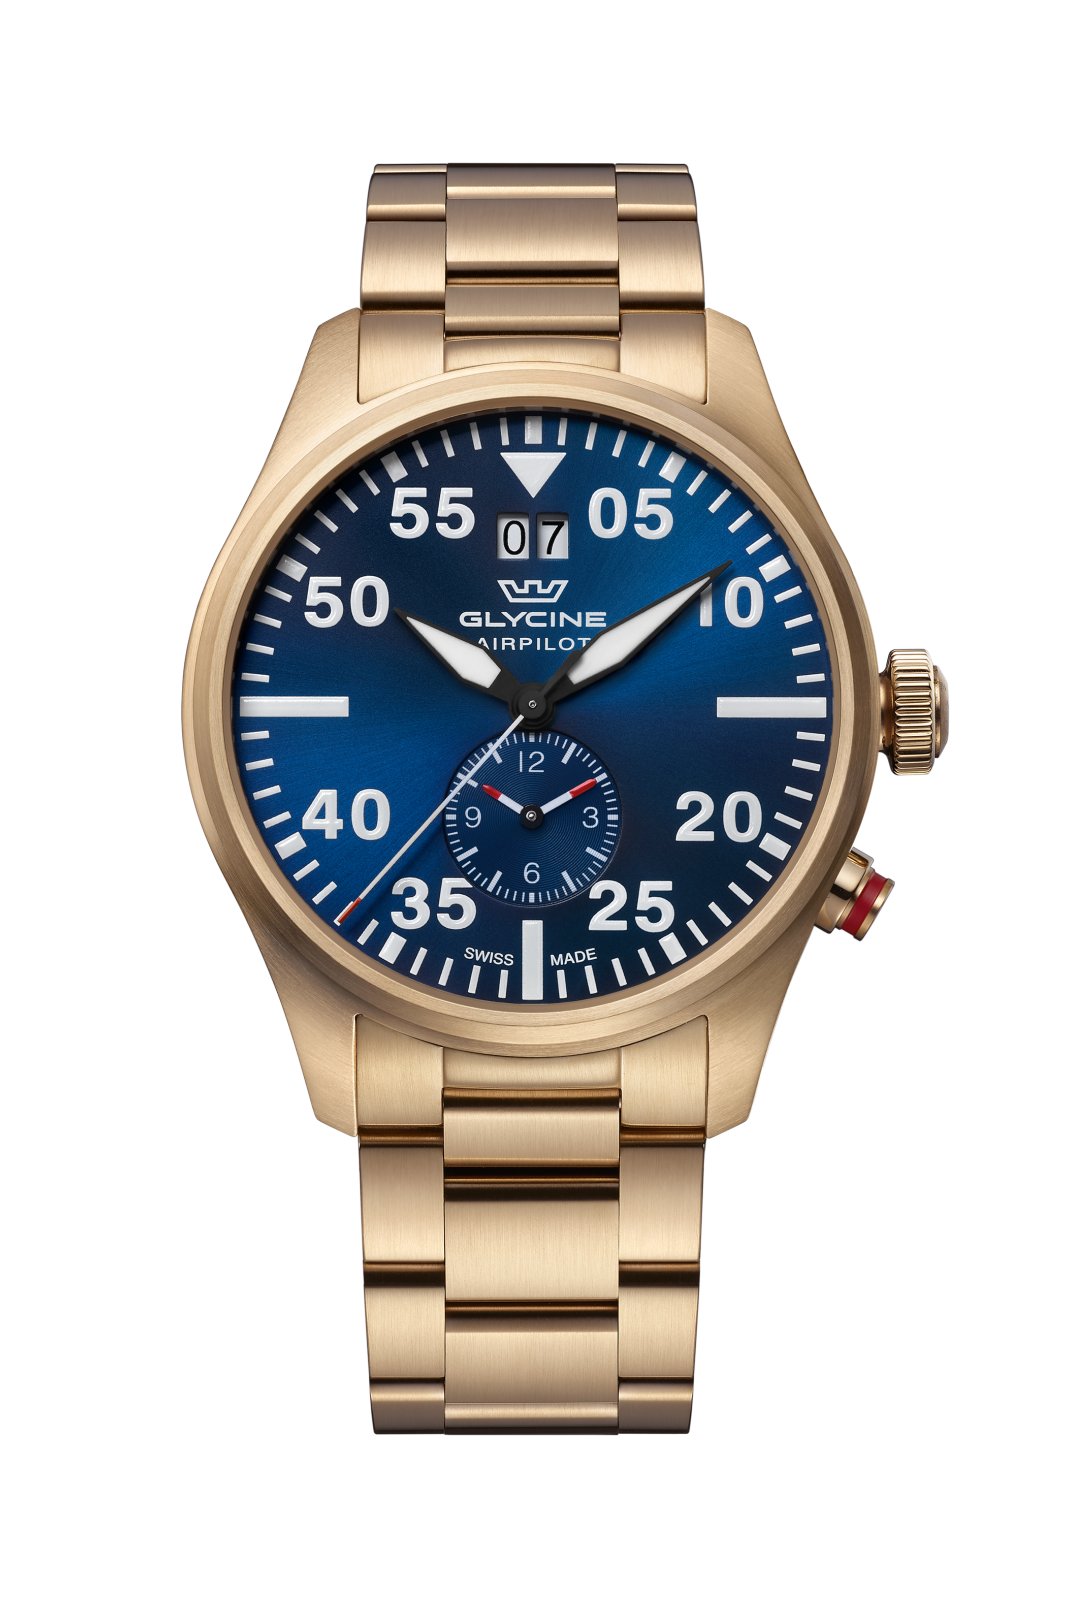 Glycine Airpilot Dual Time GL0368 Men's Quartz Watch - 44mm